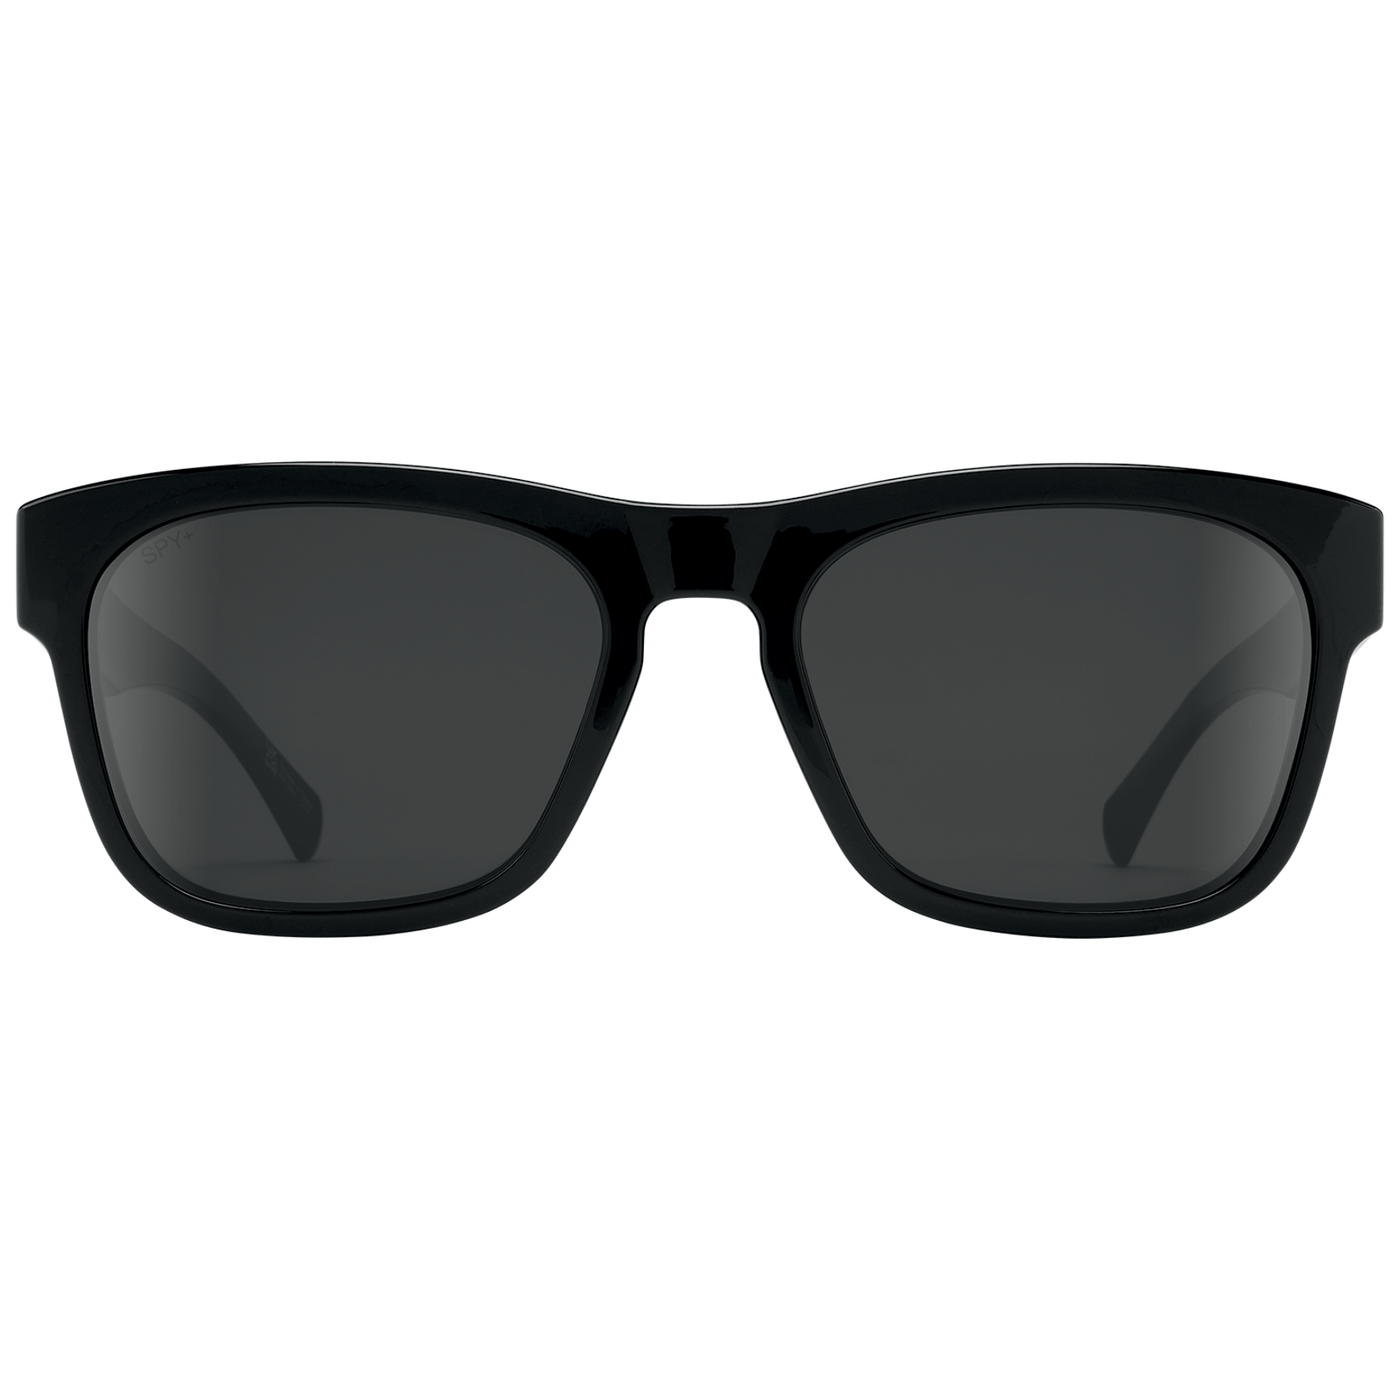 SPY black, square shape sunglasses 